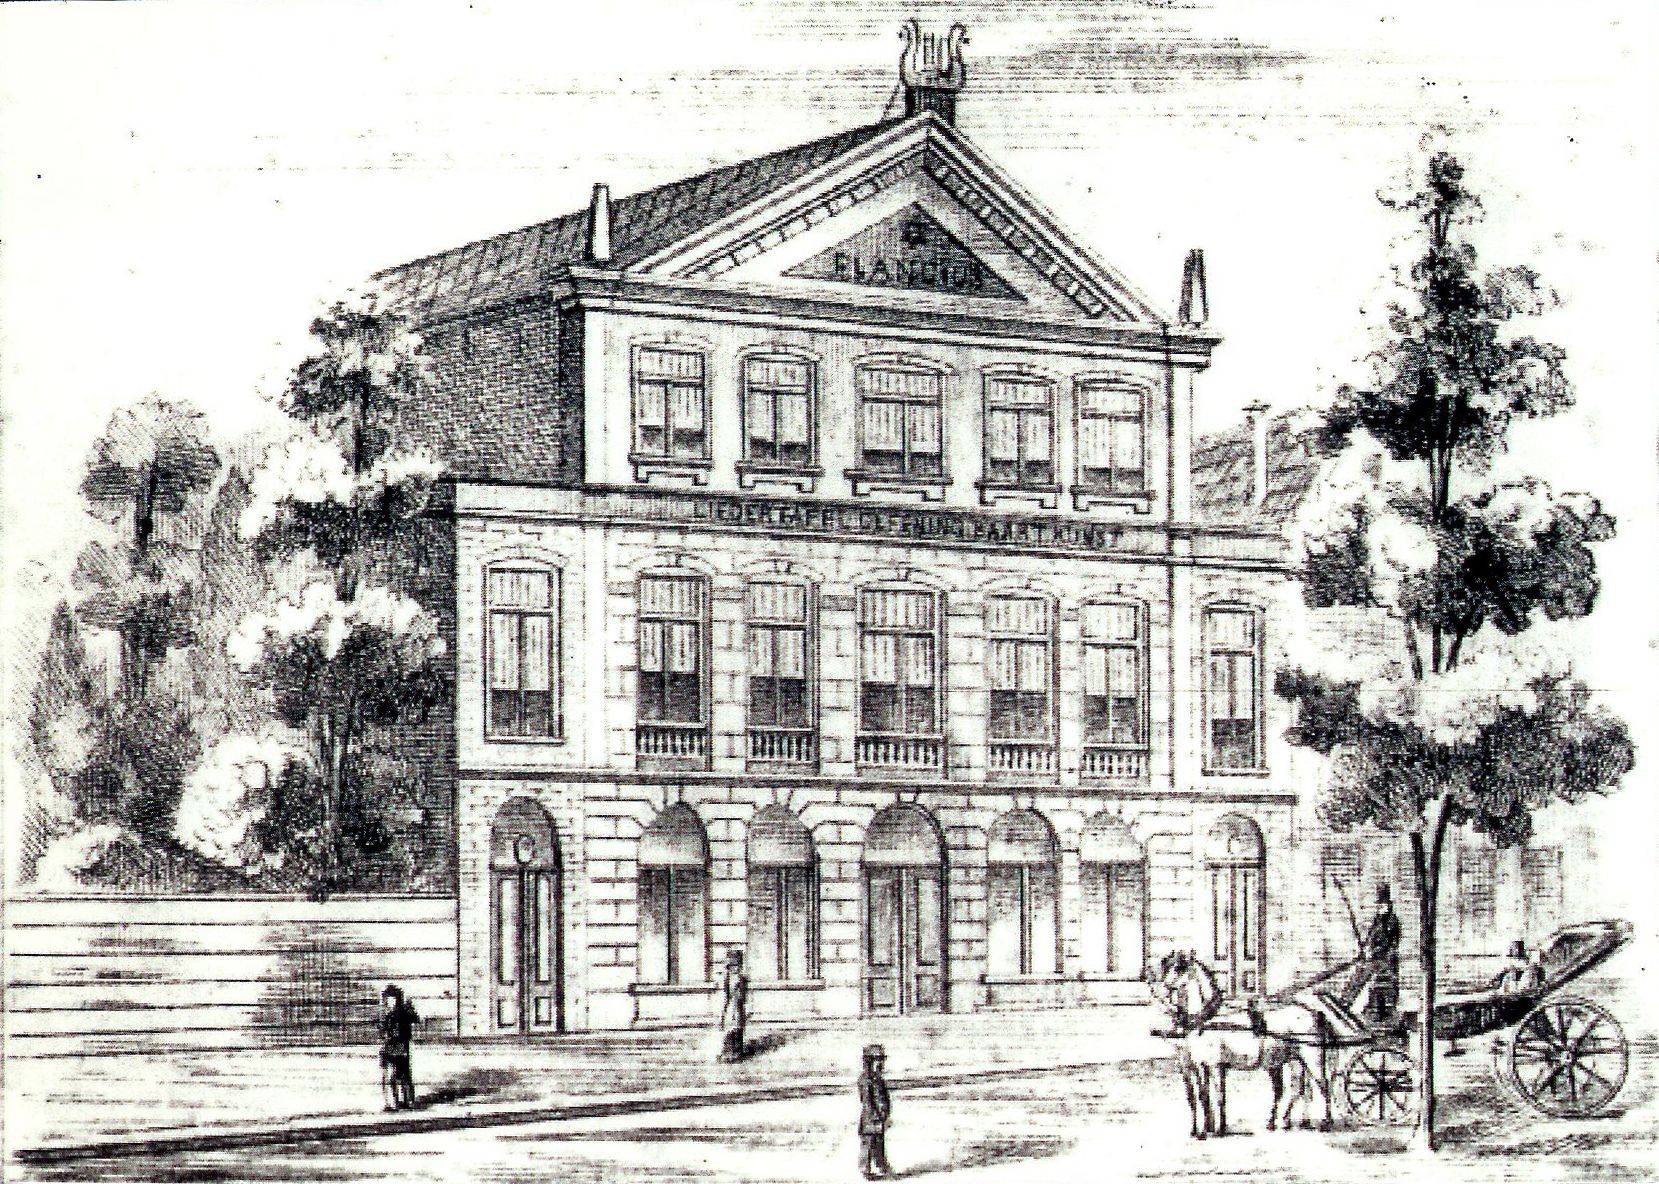 The Plancius Building in de 19th century 